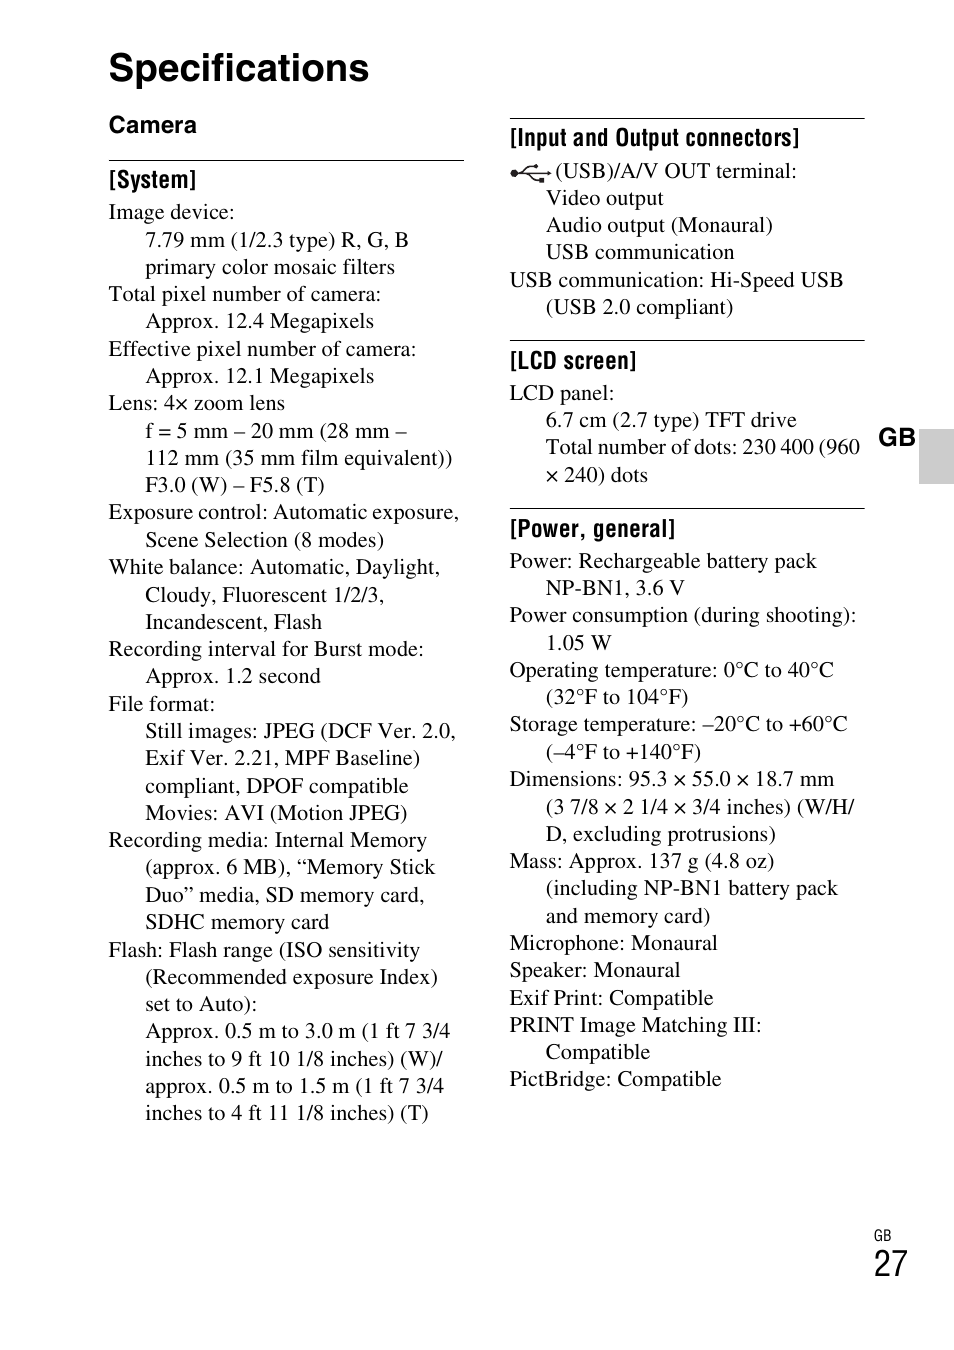 Specifications | Sony DSC-W310 User Manual | Page 27 / 56